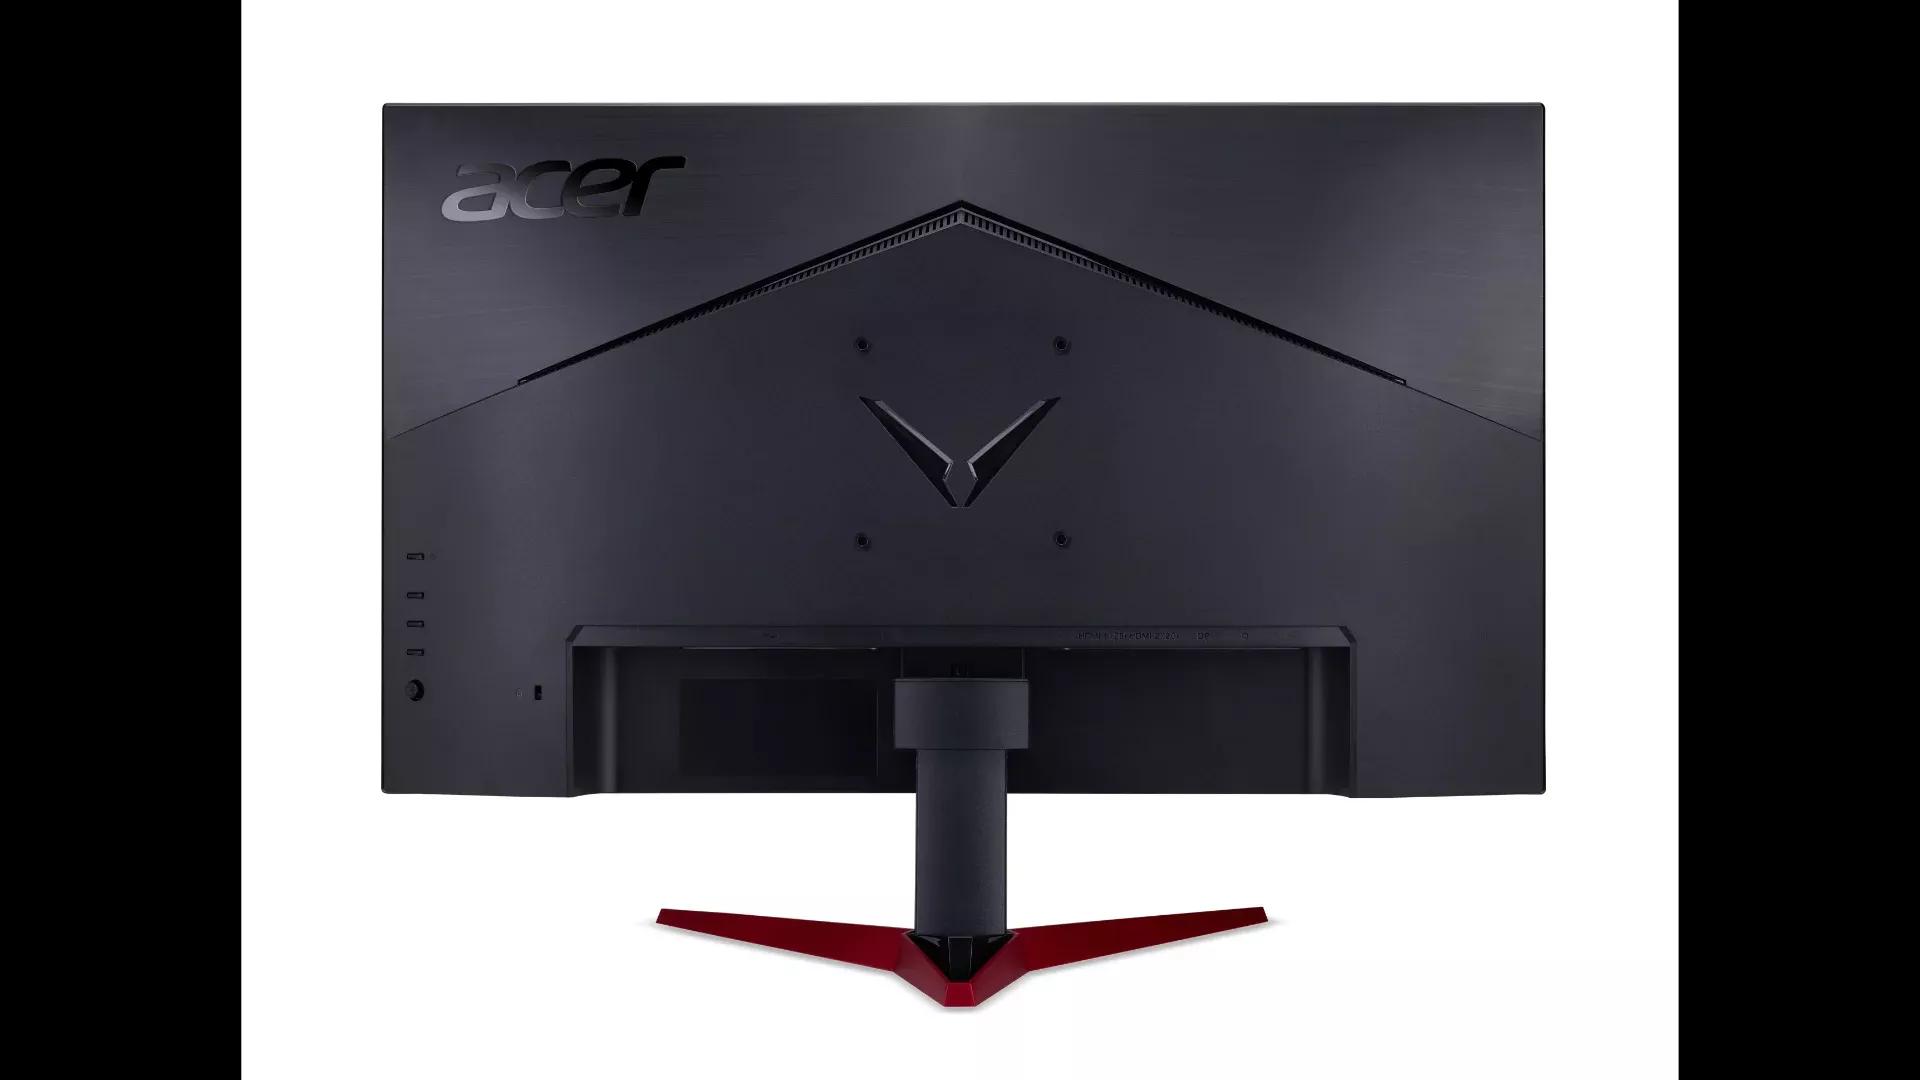 Acer Nitro VG270 M3 27-inch FHD 180Hz IPS Gaming LED Monitor